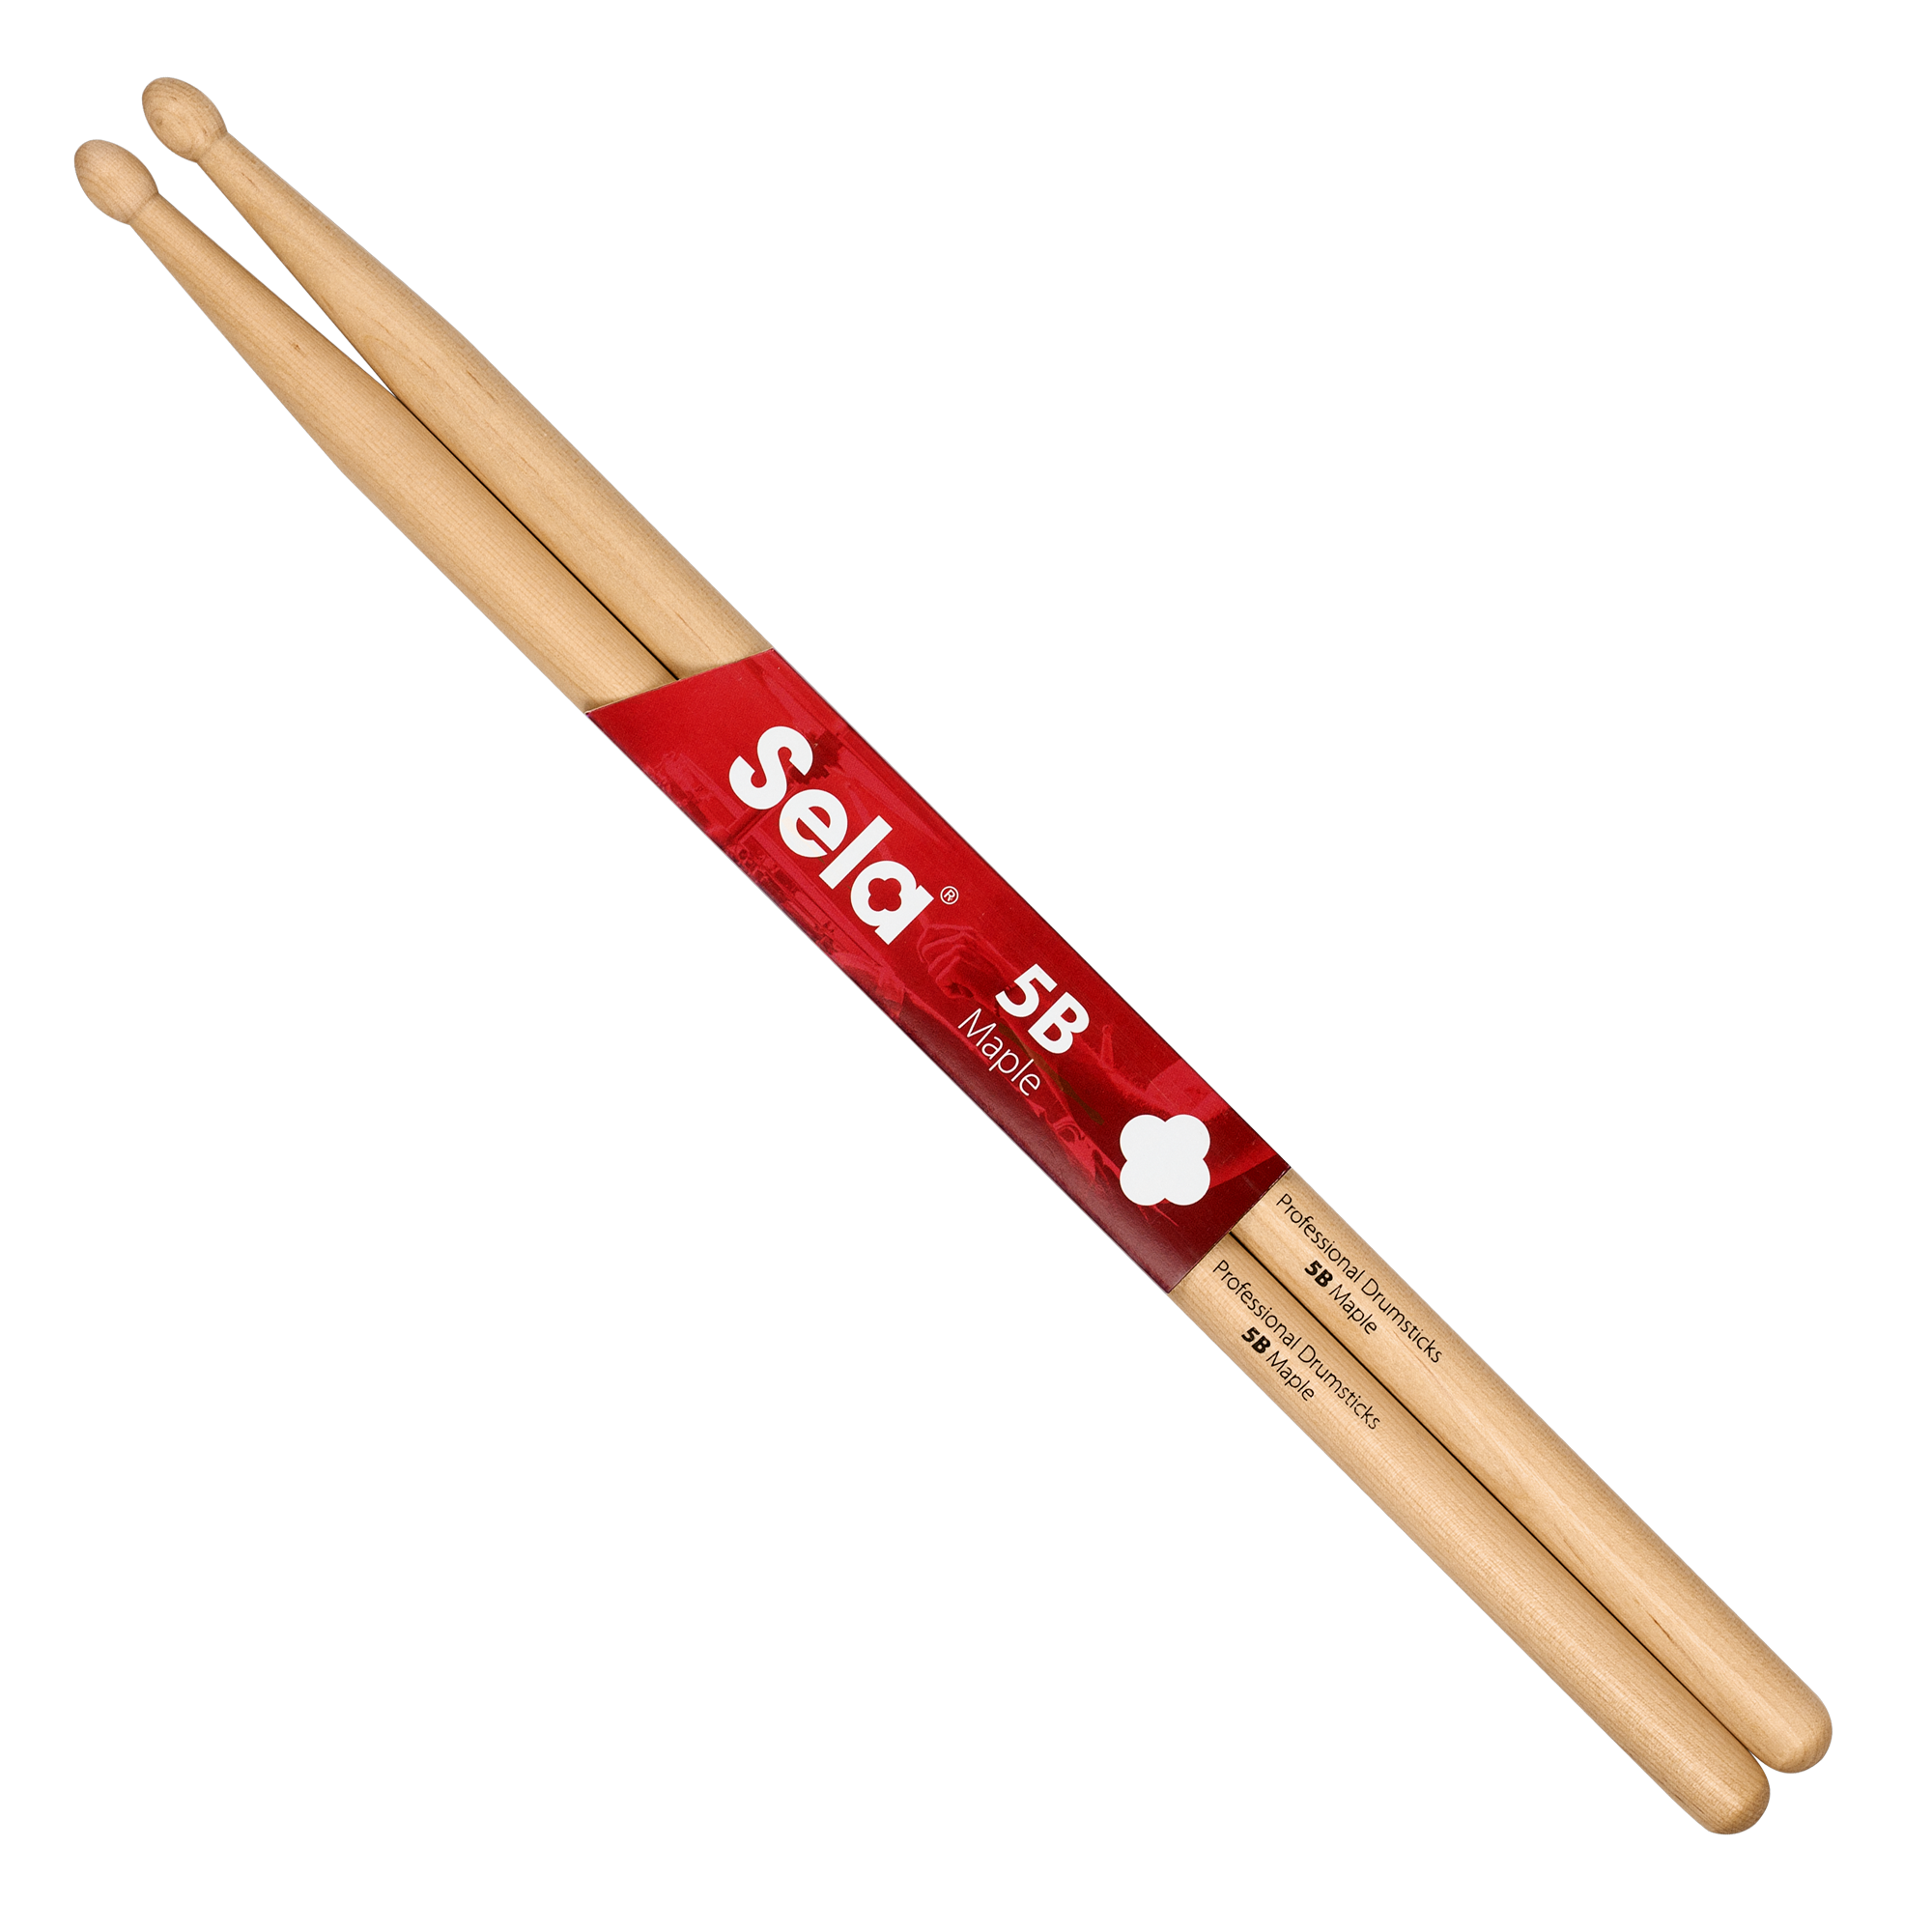 Professional Drumsticks 5B Maple